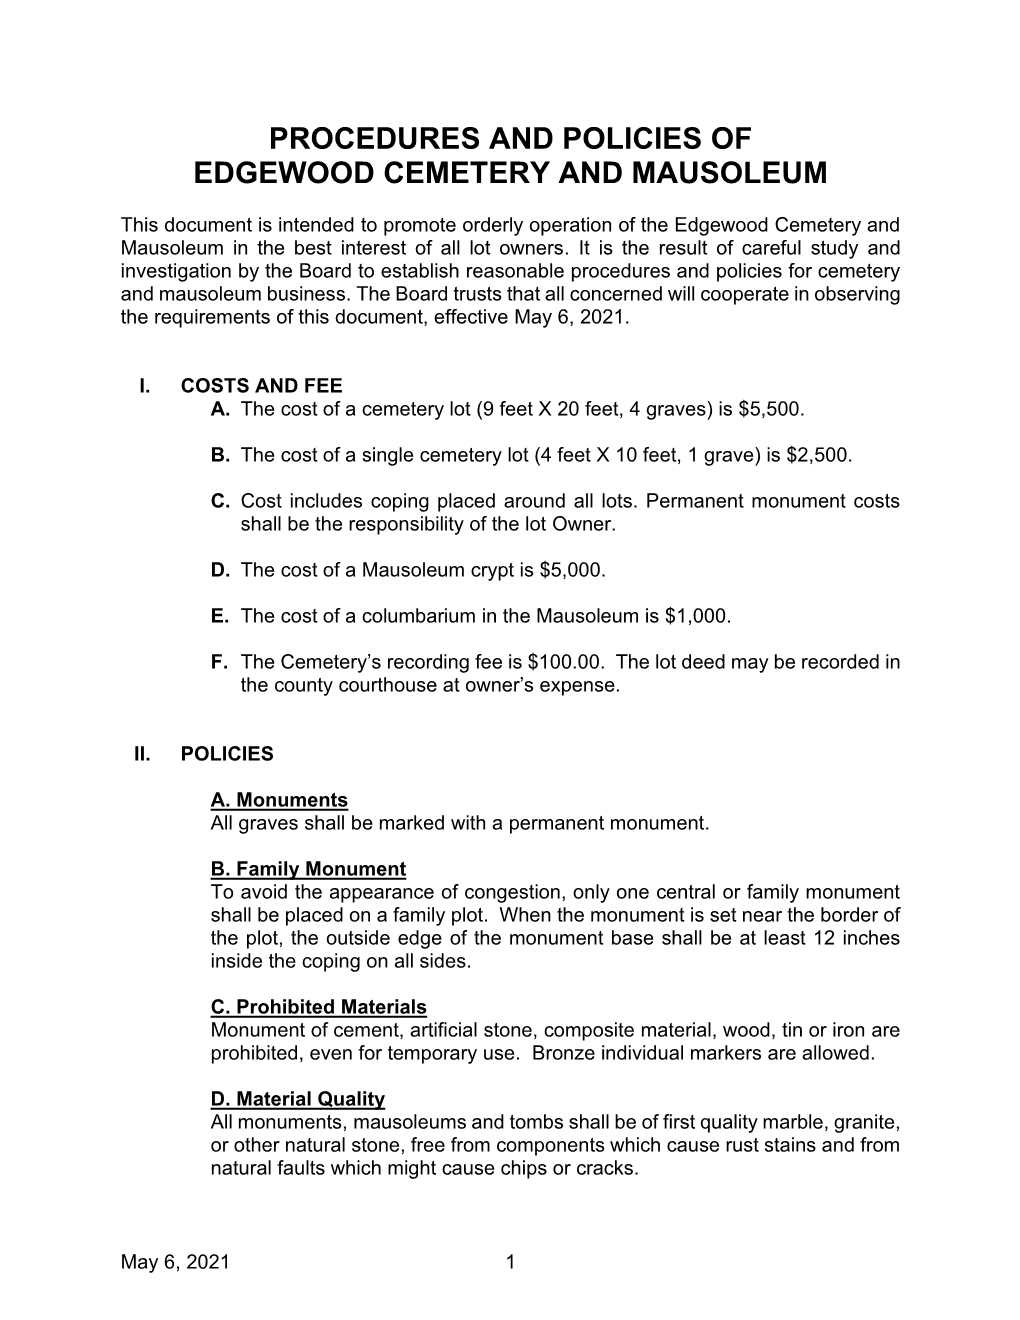 Edgwood Cemetery & Mausoleum Guidelines